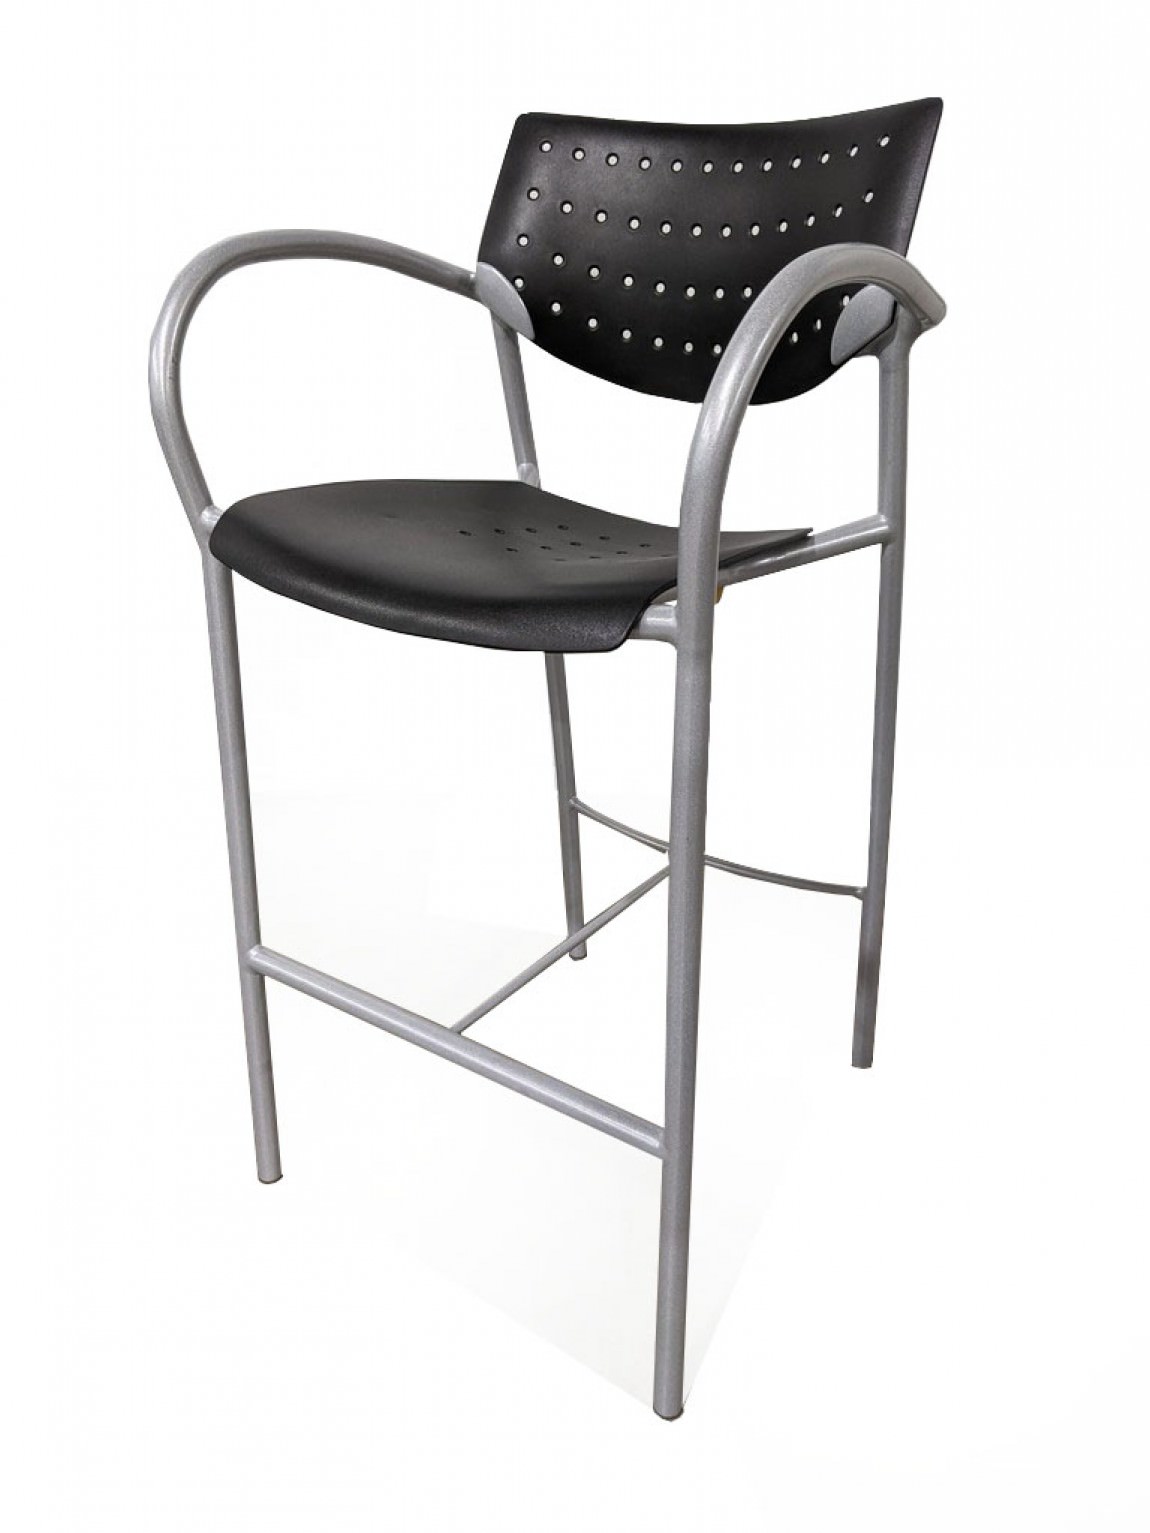 Black Café Height Chair - 42 inch High